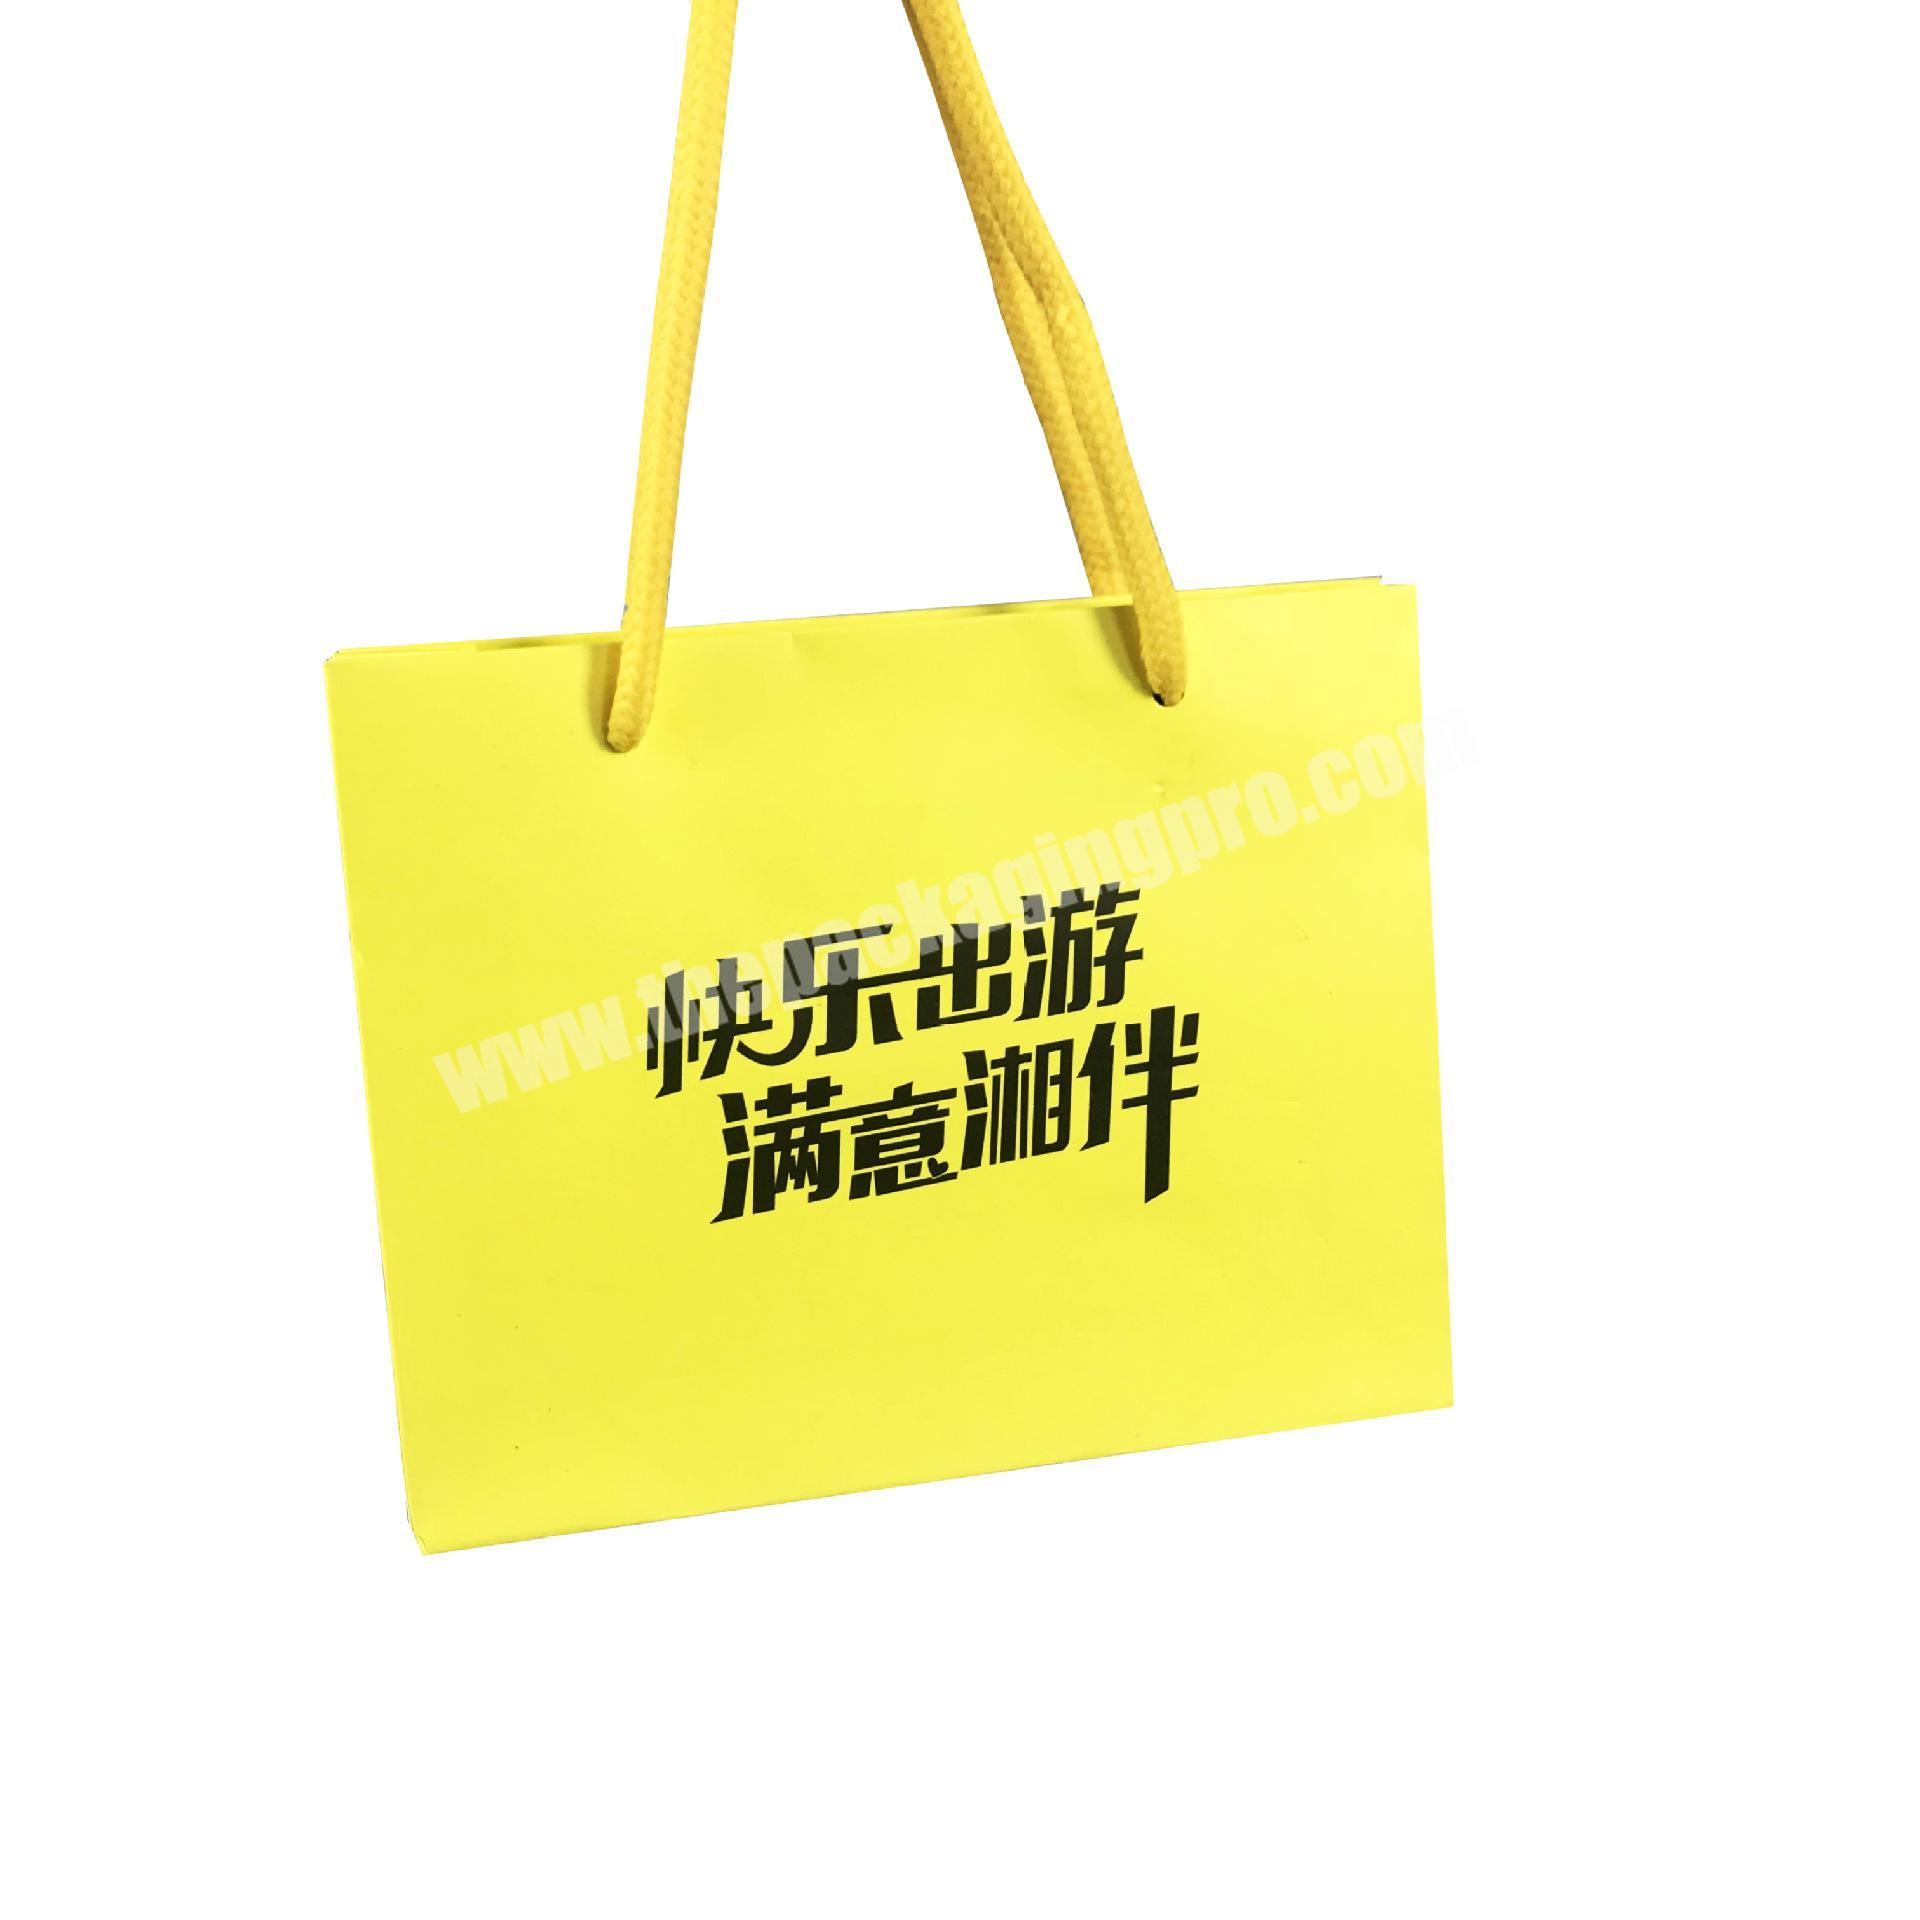 Factory direct shopping bag custom bag gift bag